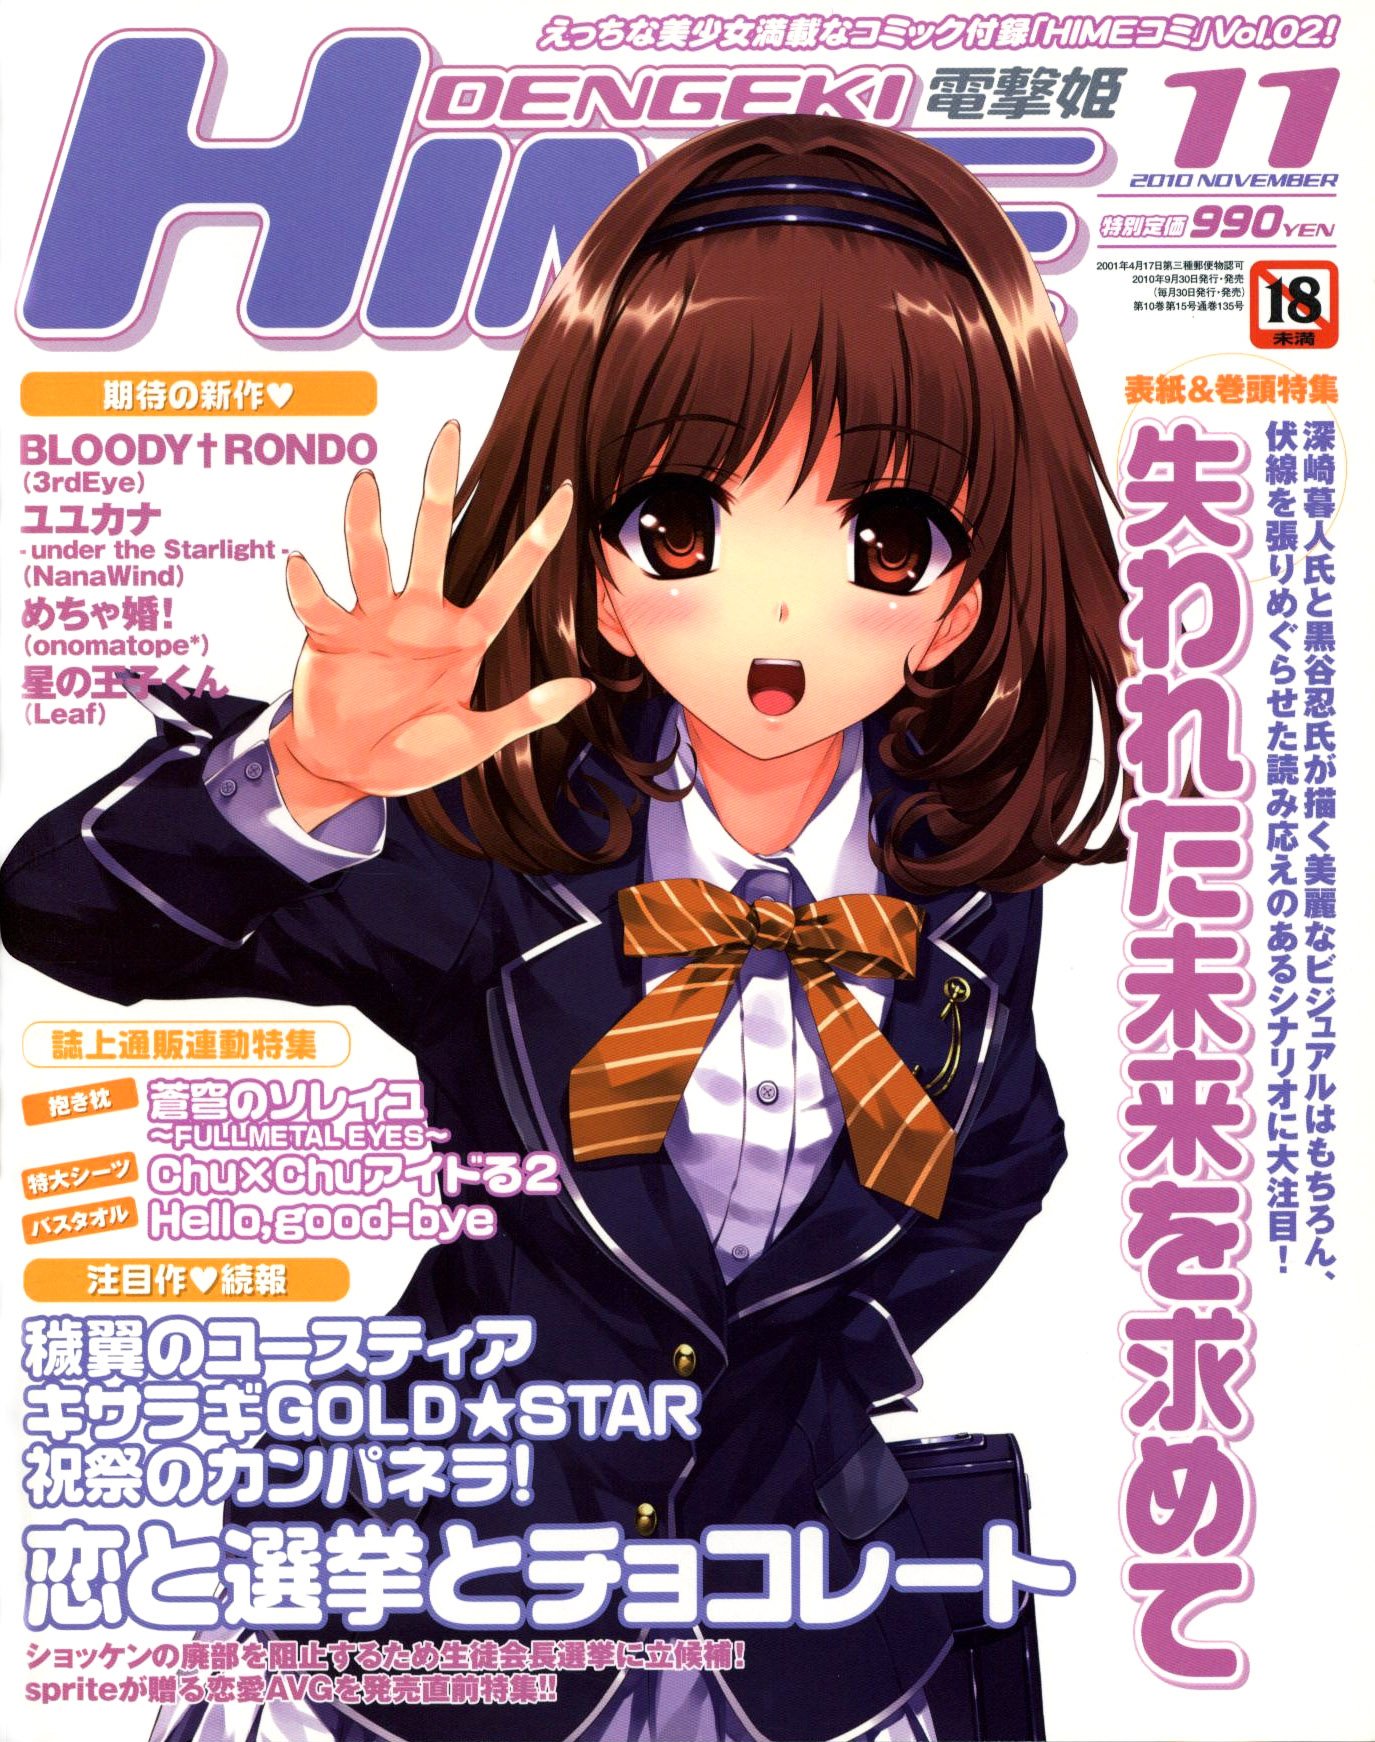 Dengeki Hime - Video Game Magazines - Page 6 - Retromags Community